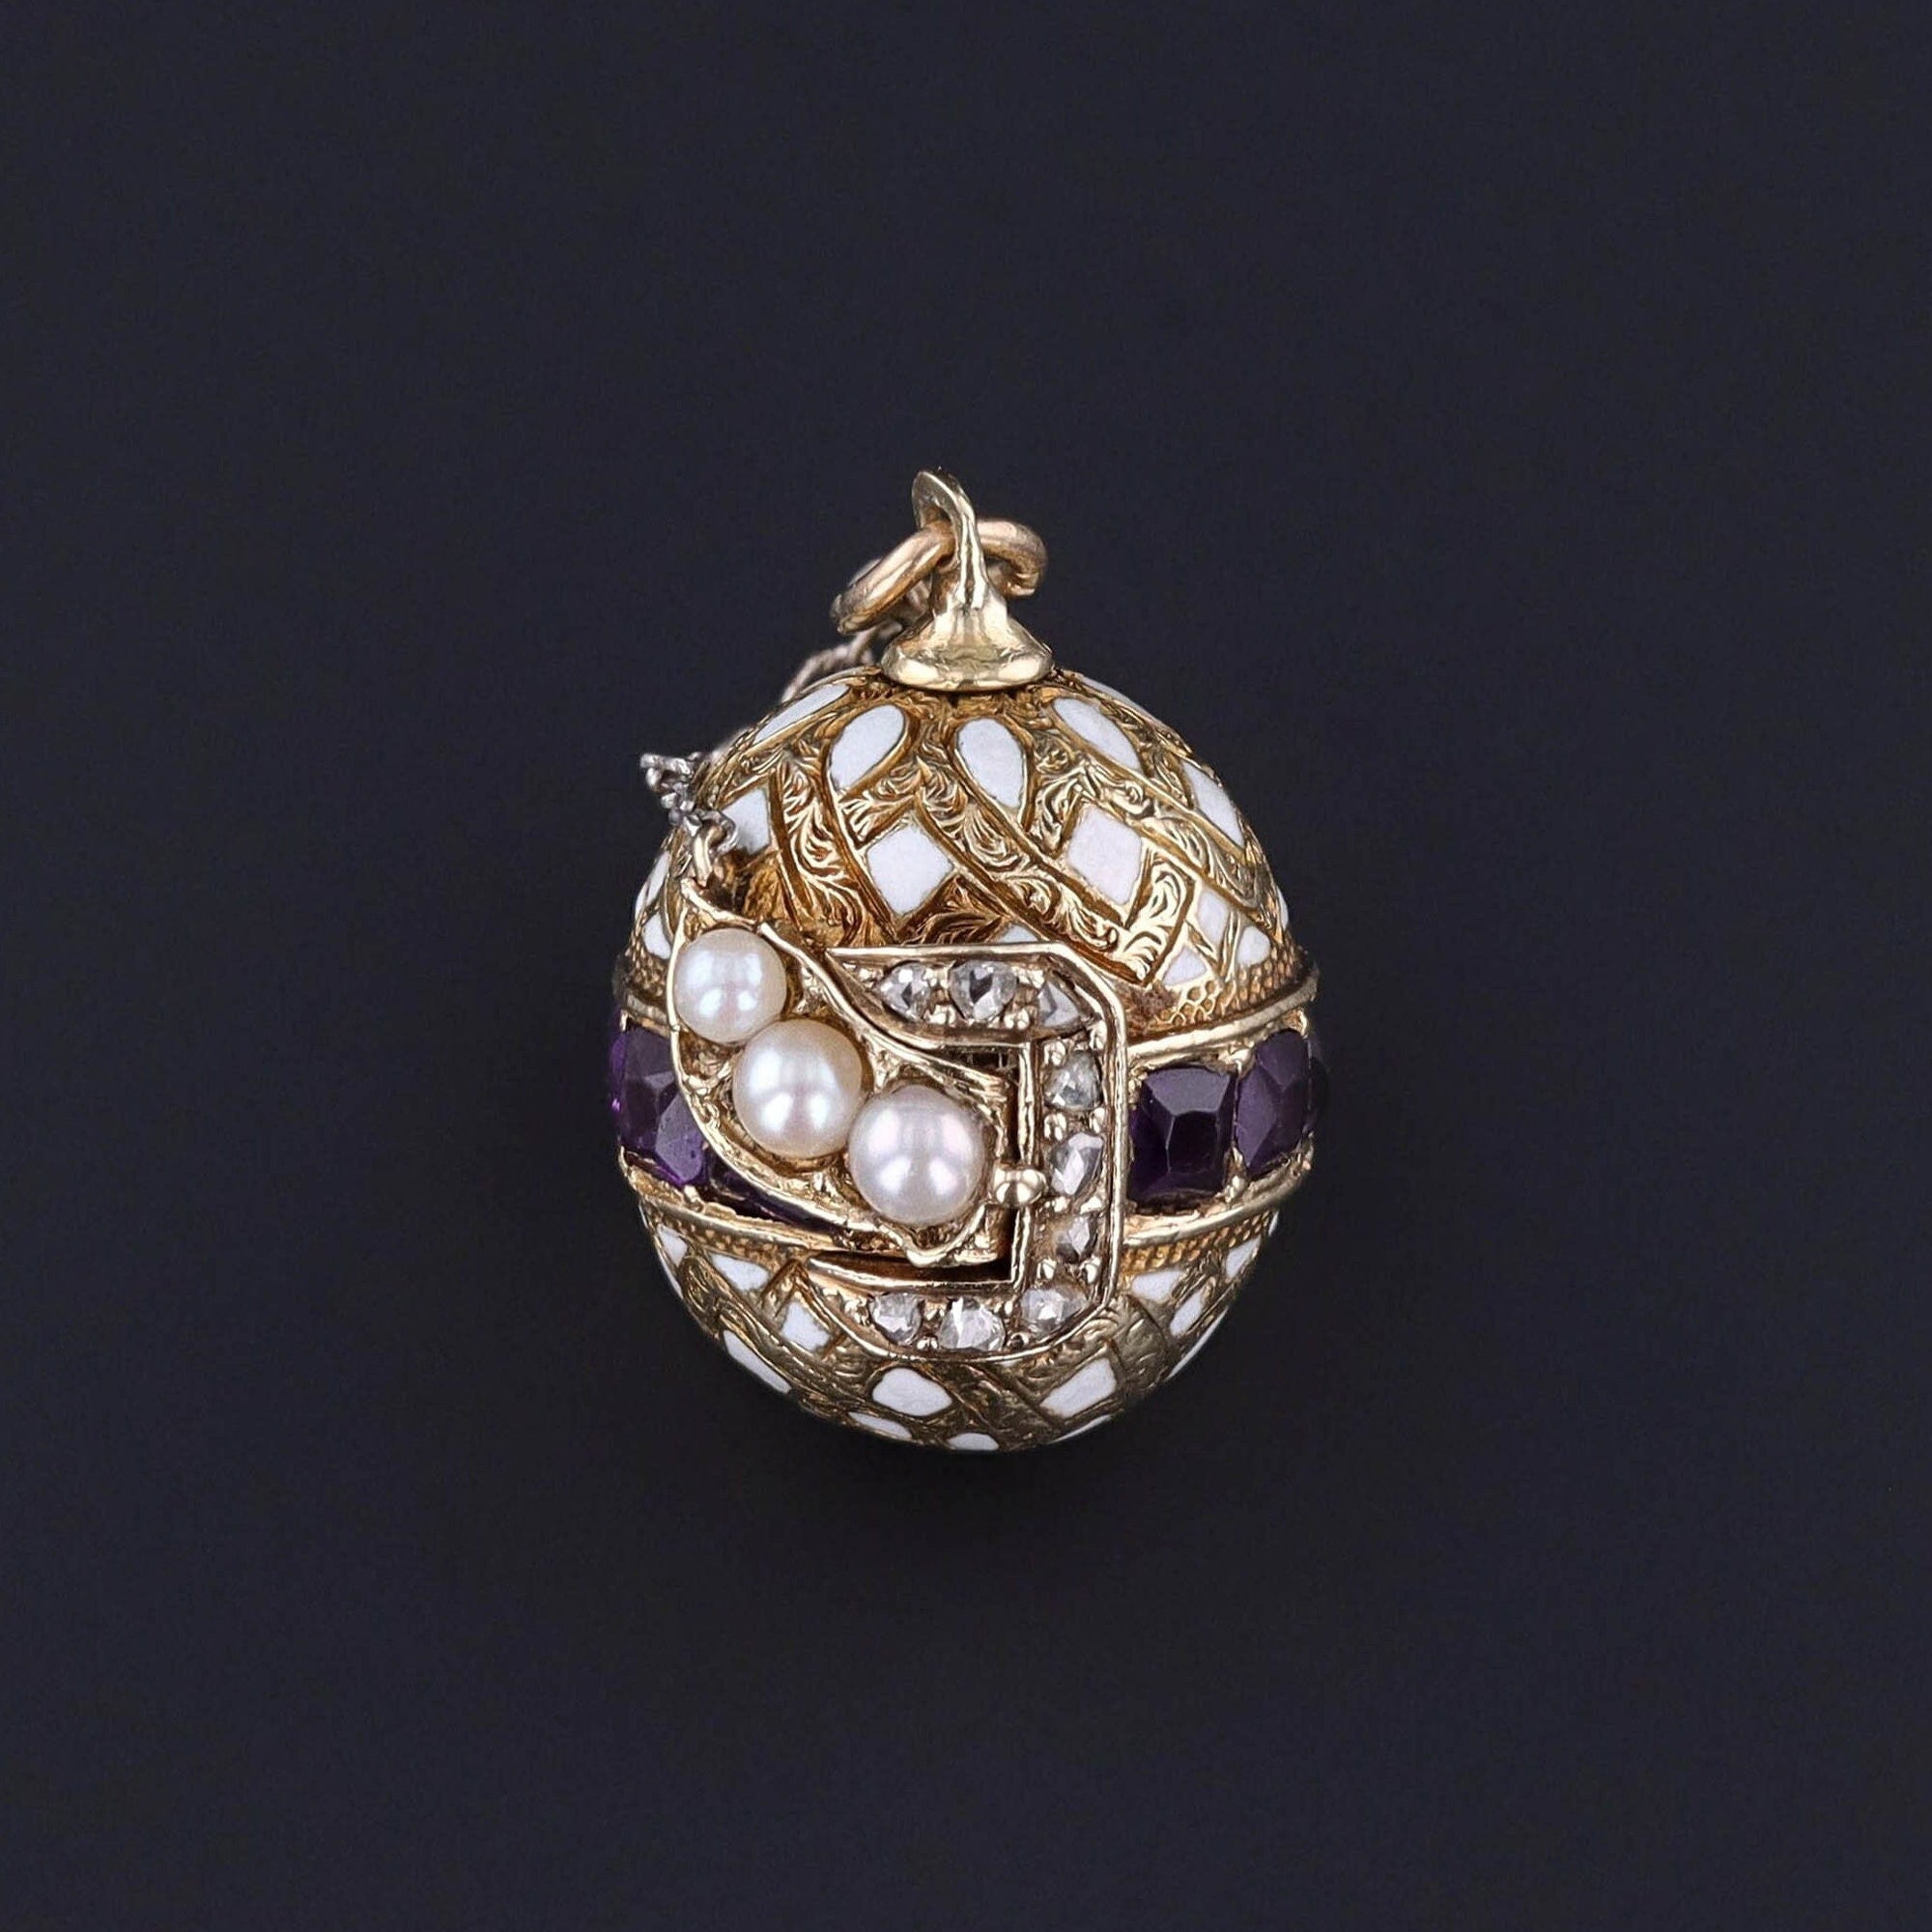 Antique Amethyst Egg Charm of 18k Gold